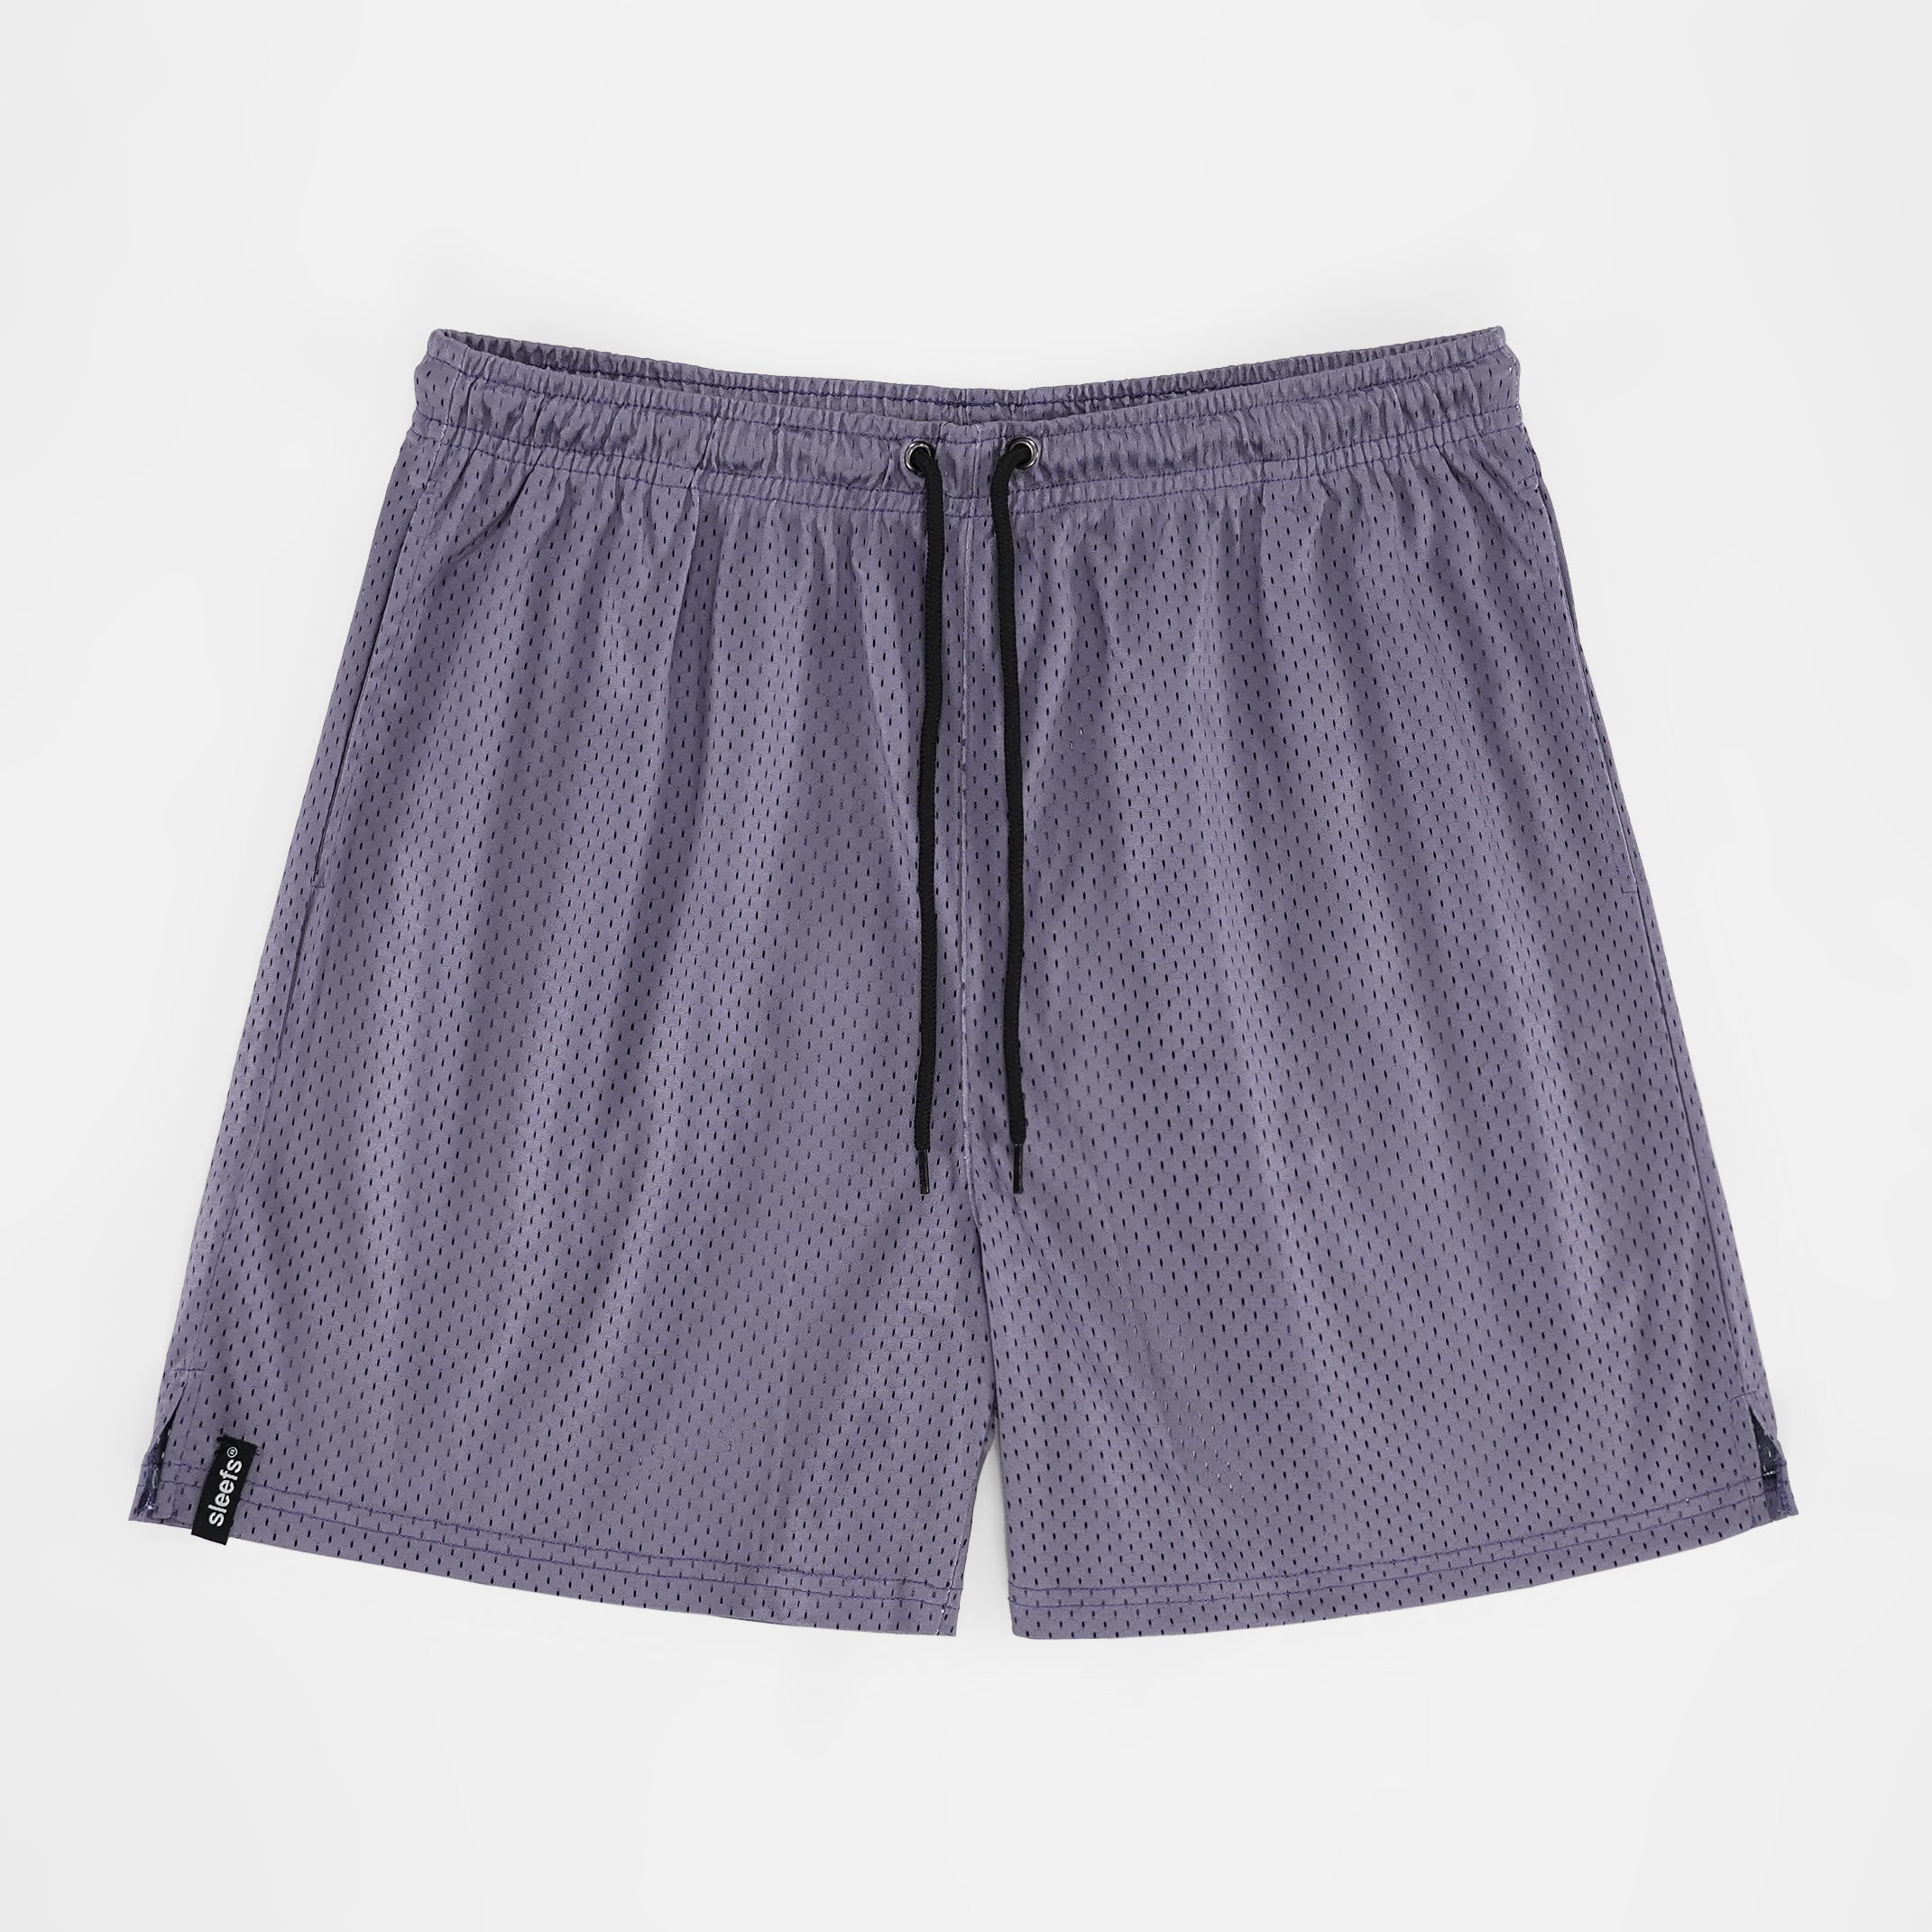 Slate Gray Shorts - 7